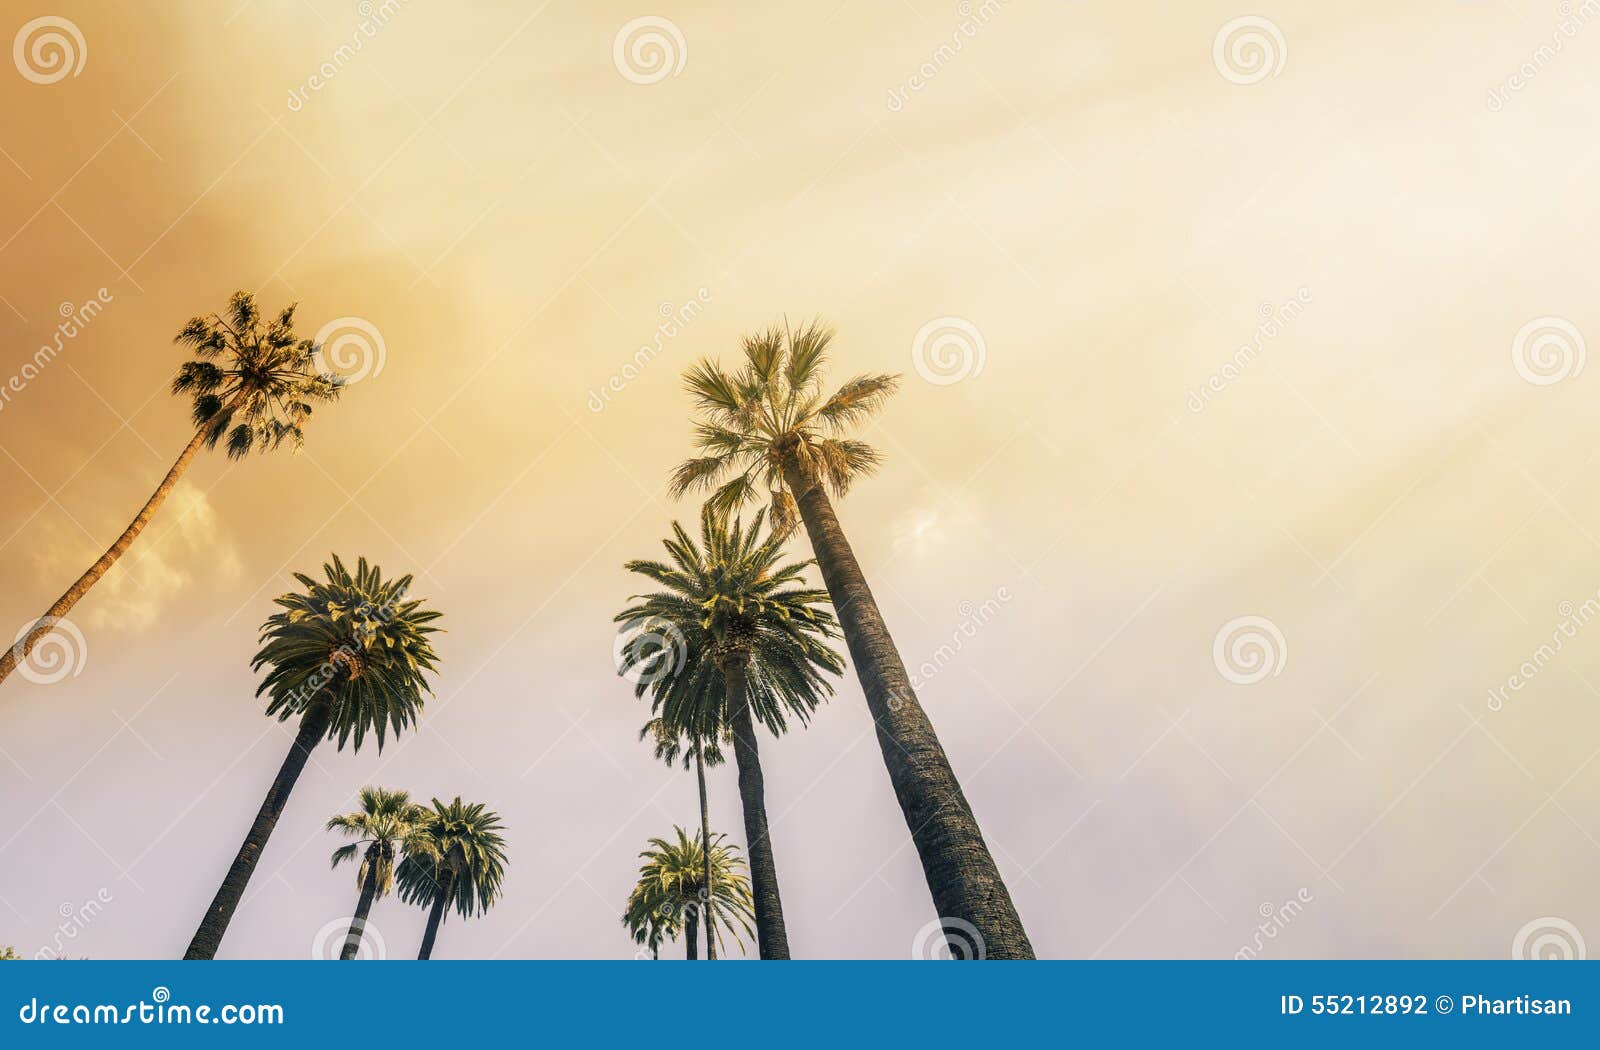 los angeles, west coast palm tree sunshine